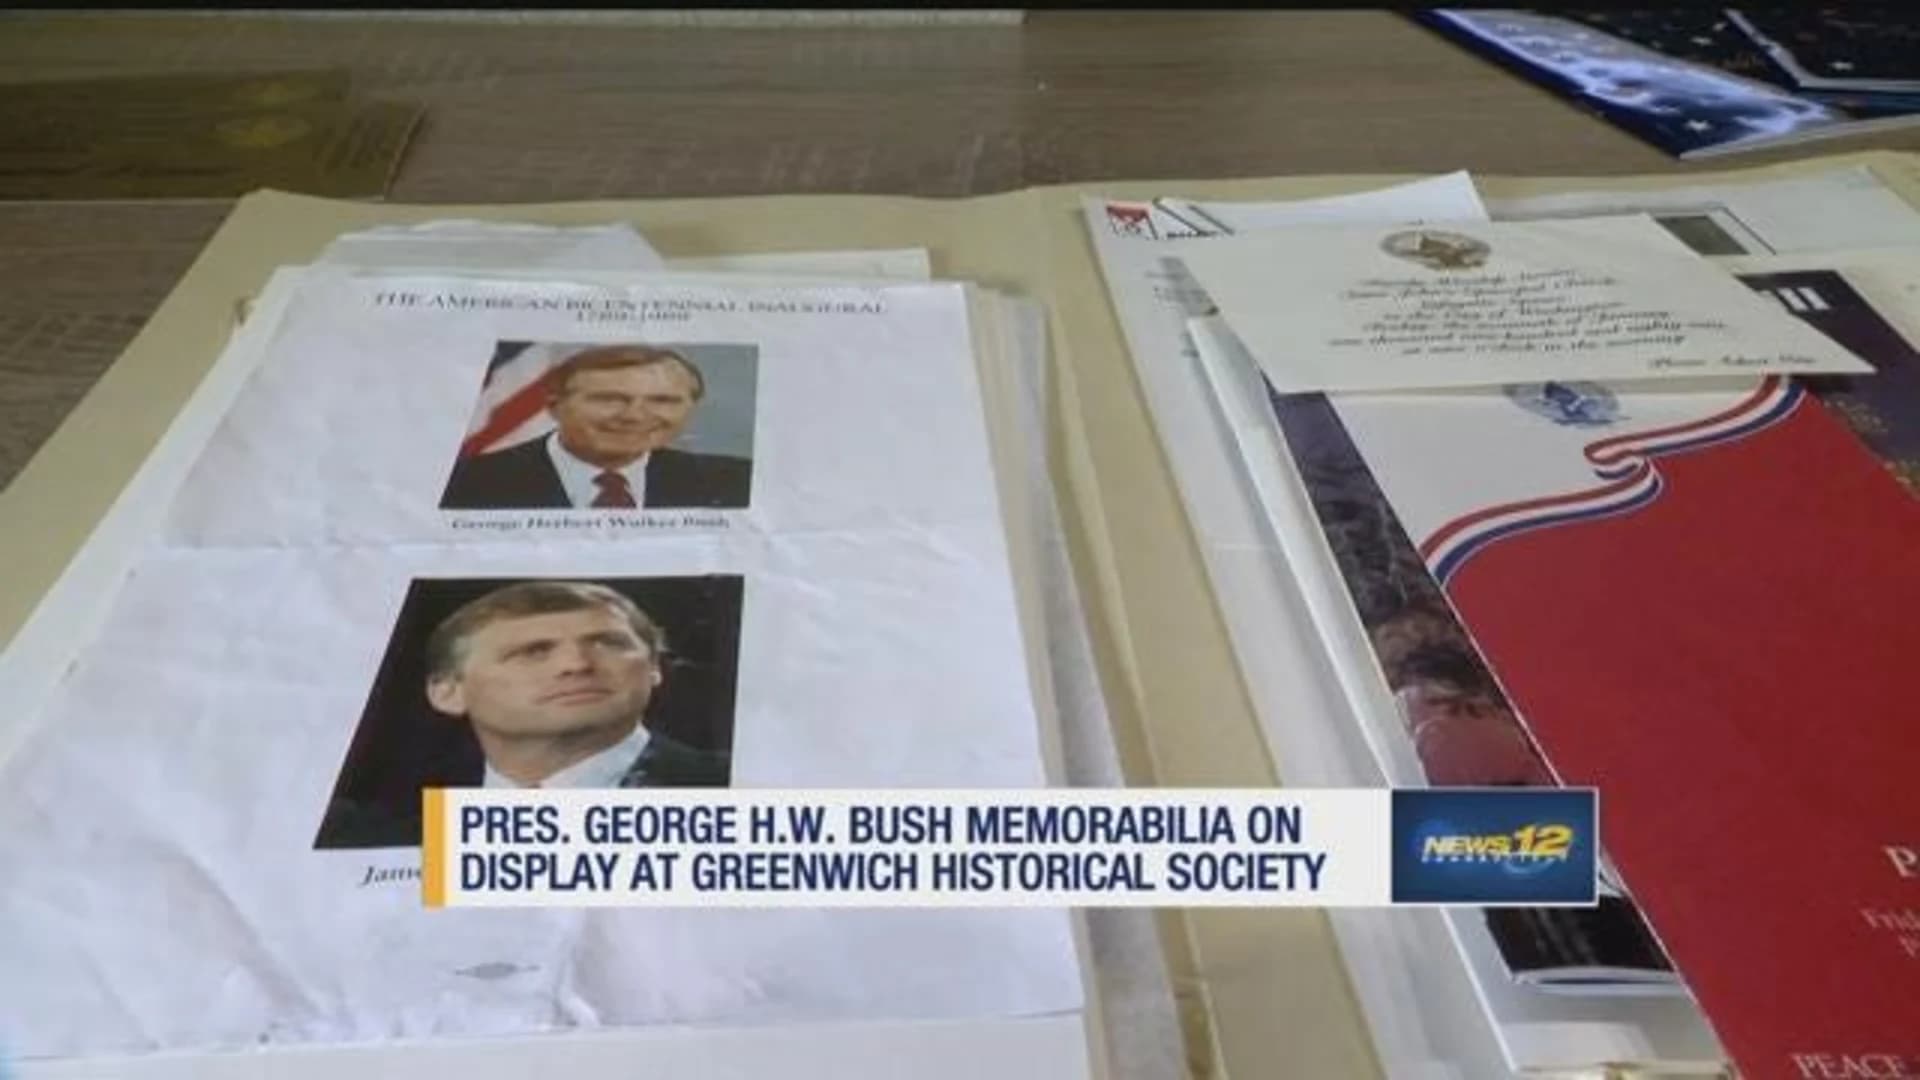 Greenwich Historical Society displays George H.W. Bush memorabilia